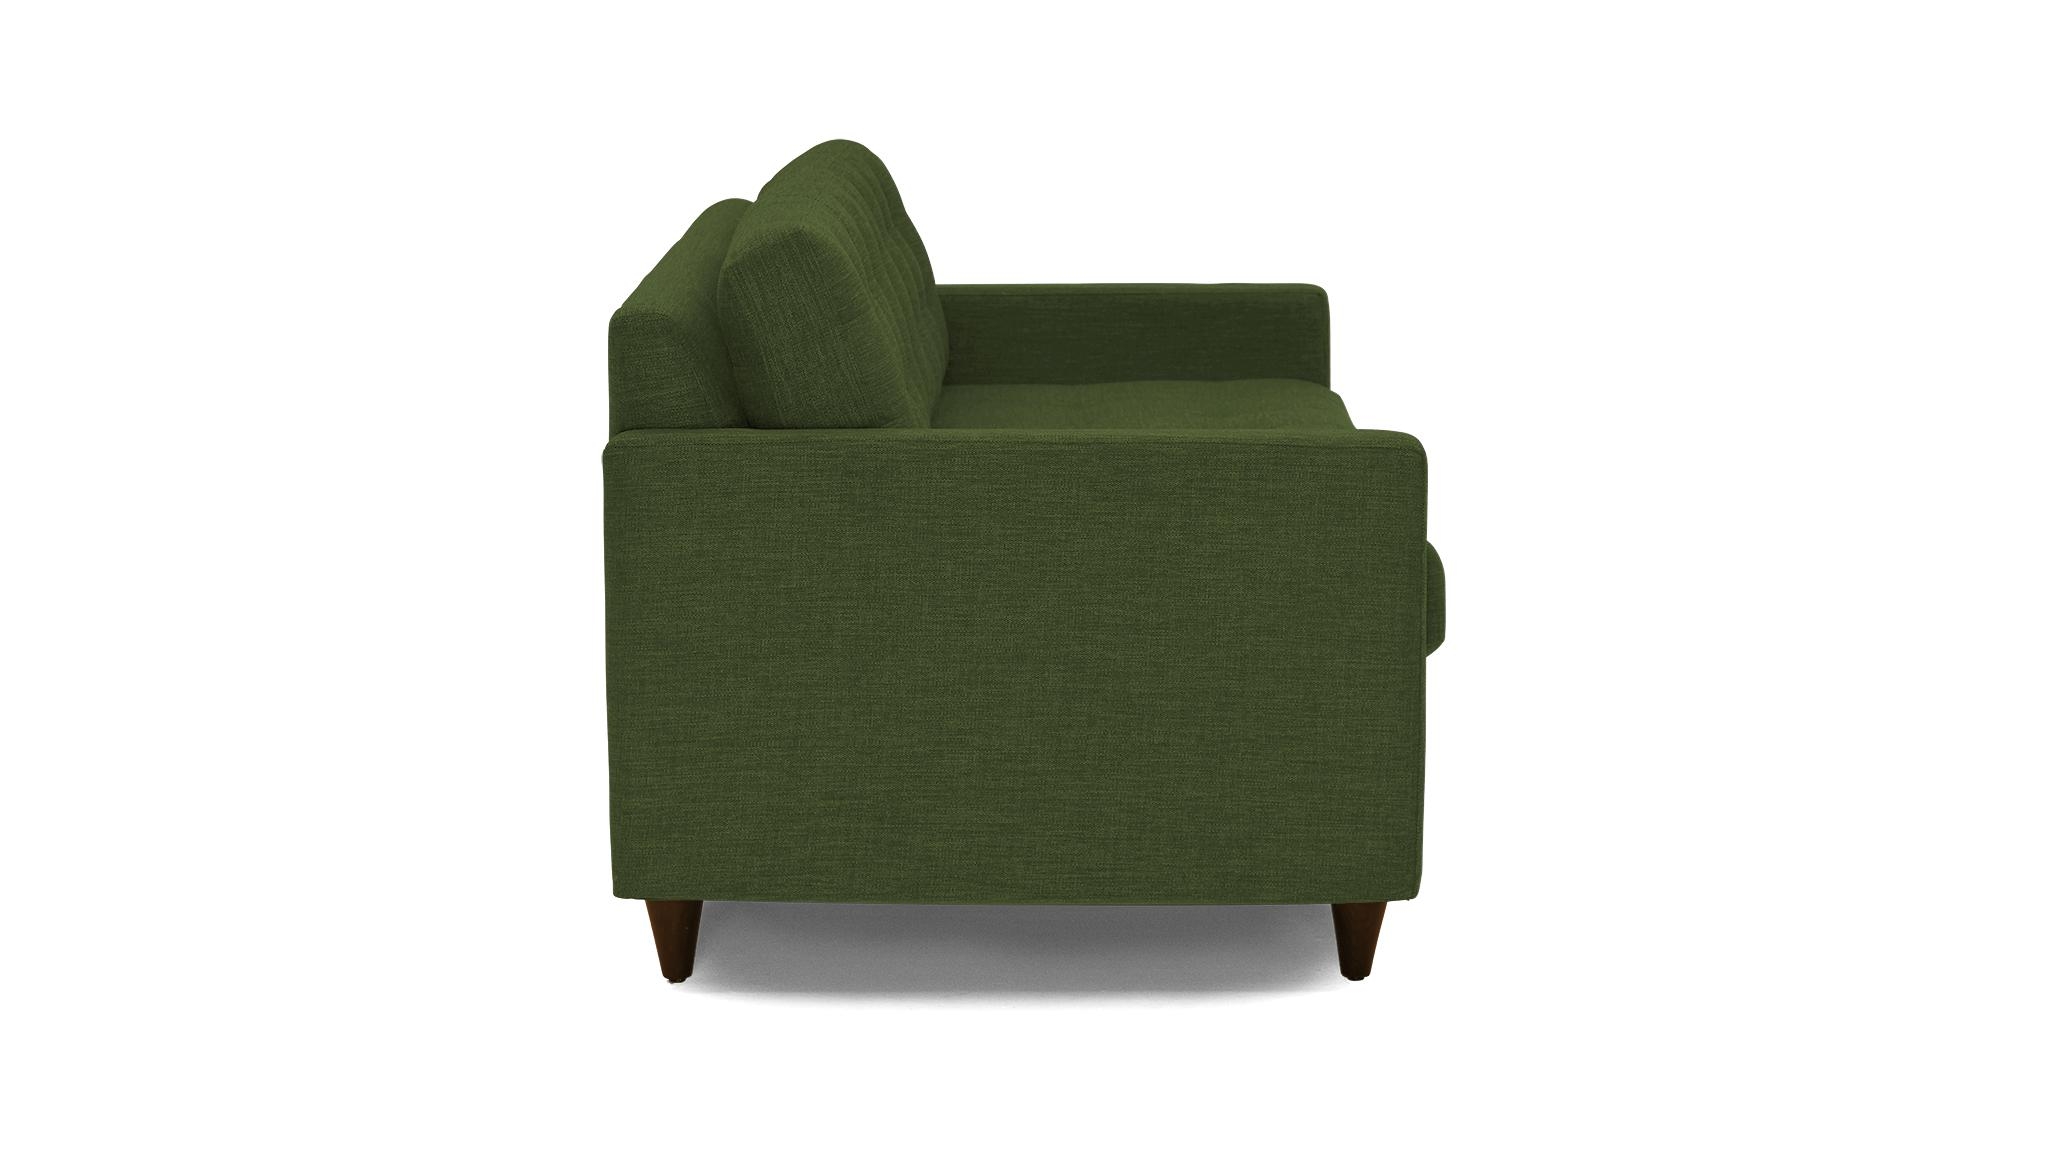 Green Eliot Mid Century Modern Sleeper Sofa - Royale Forest - Mocha - Standard Foam - Image 2